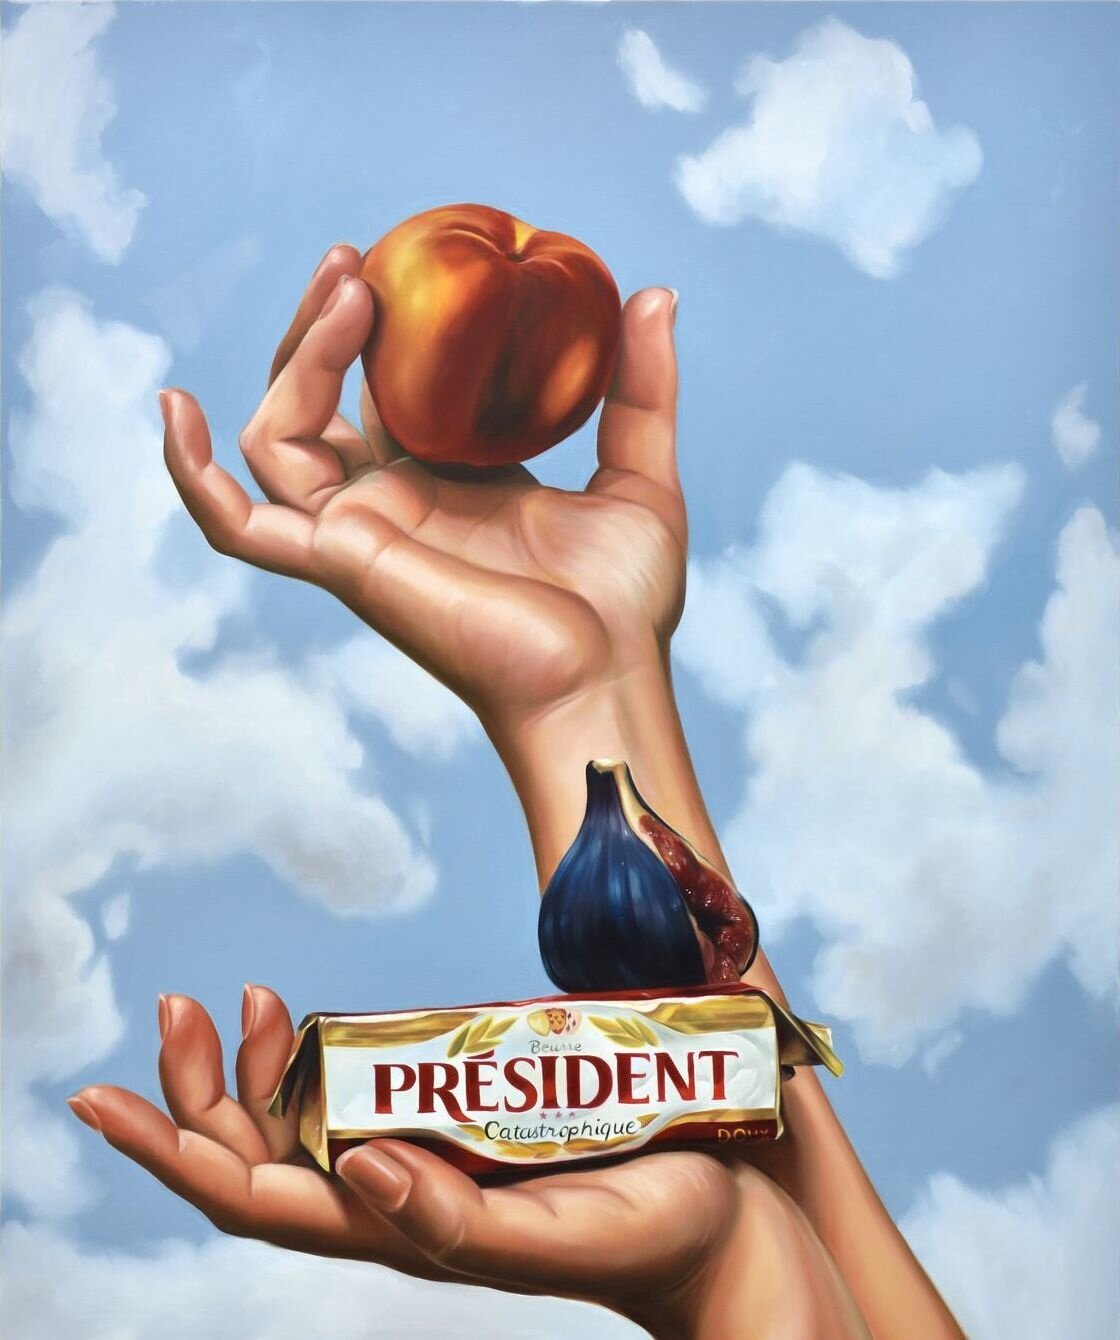 Chloe Wise: Still life with peach, president (2017).